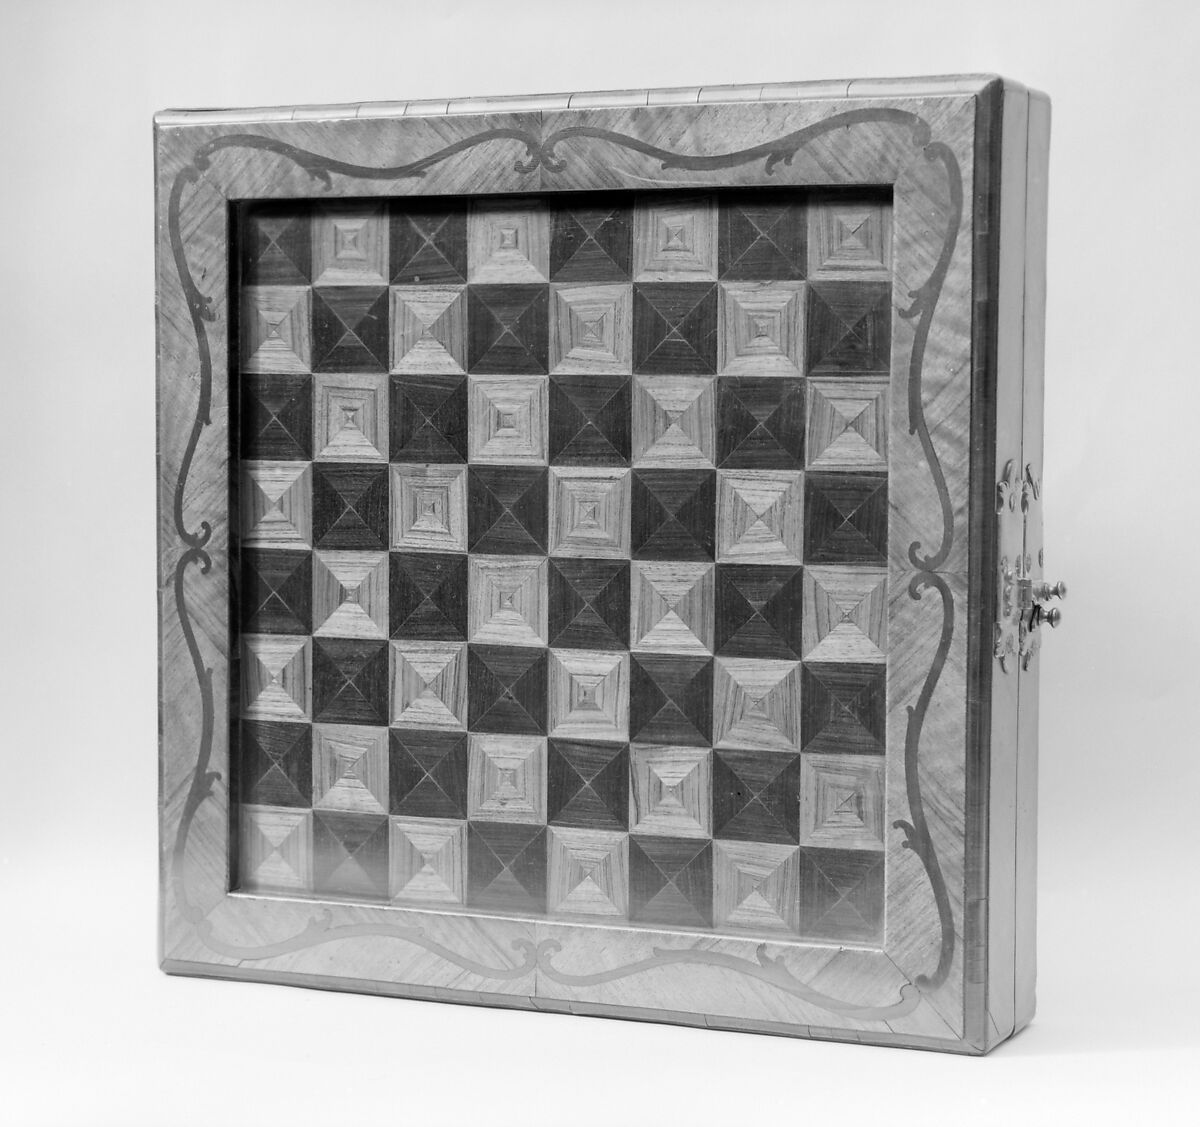 Chessboard, Wood, German 